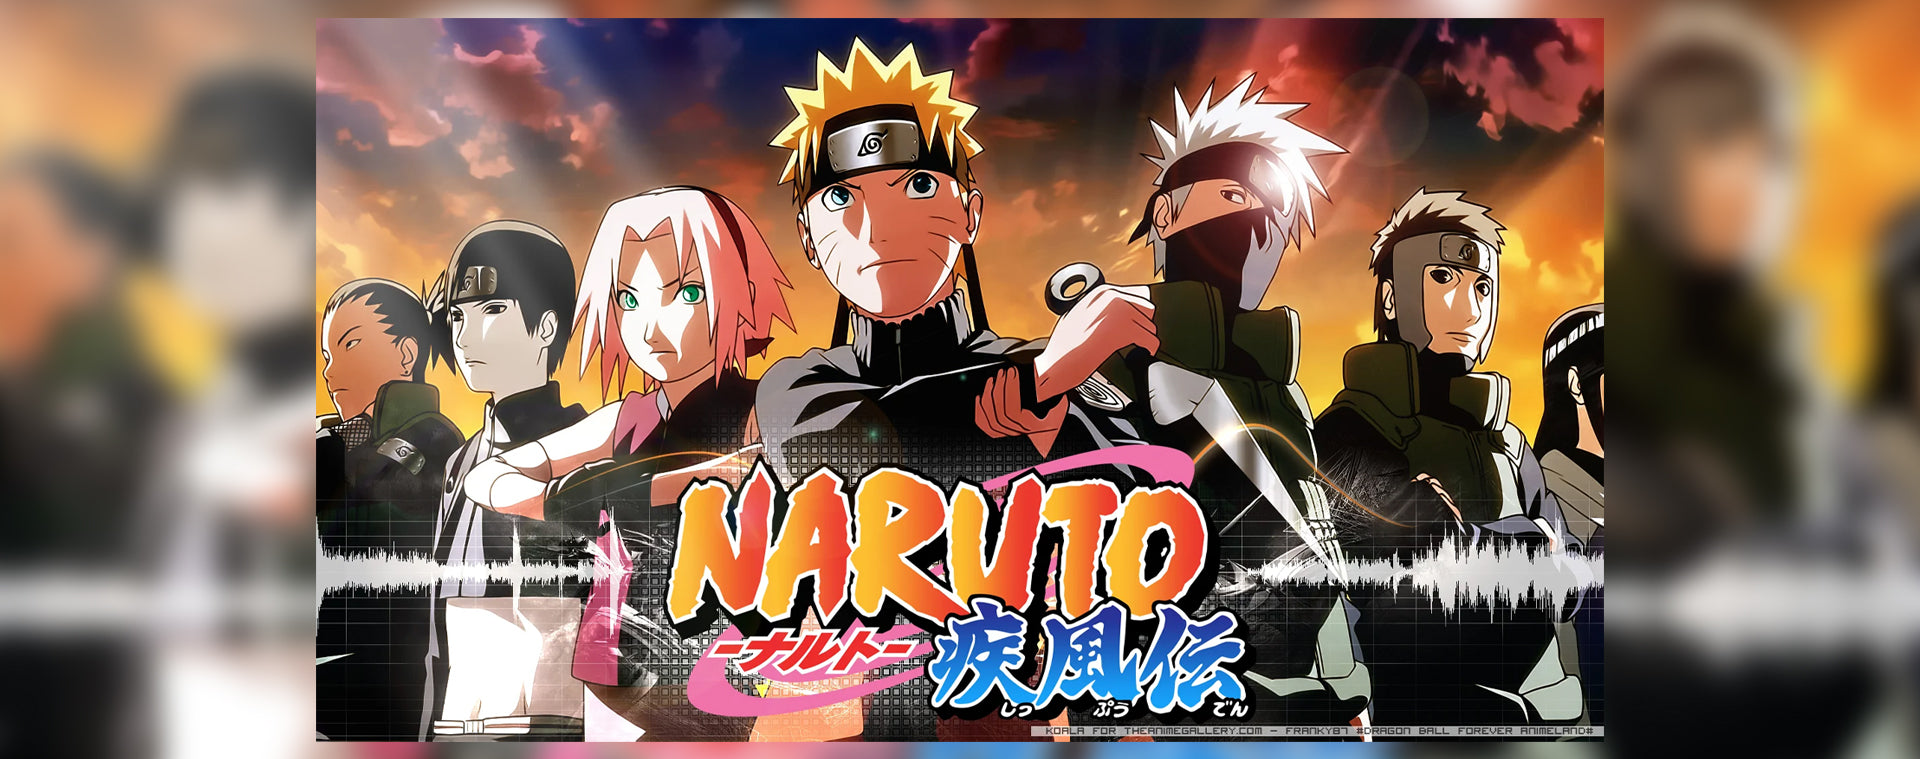 Naruto Quotes  Naruto quotes Anime qoutes Anime quotes inspirational